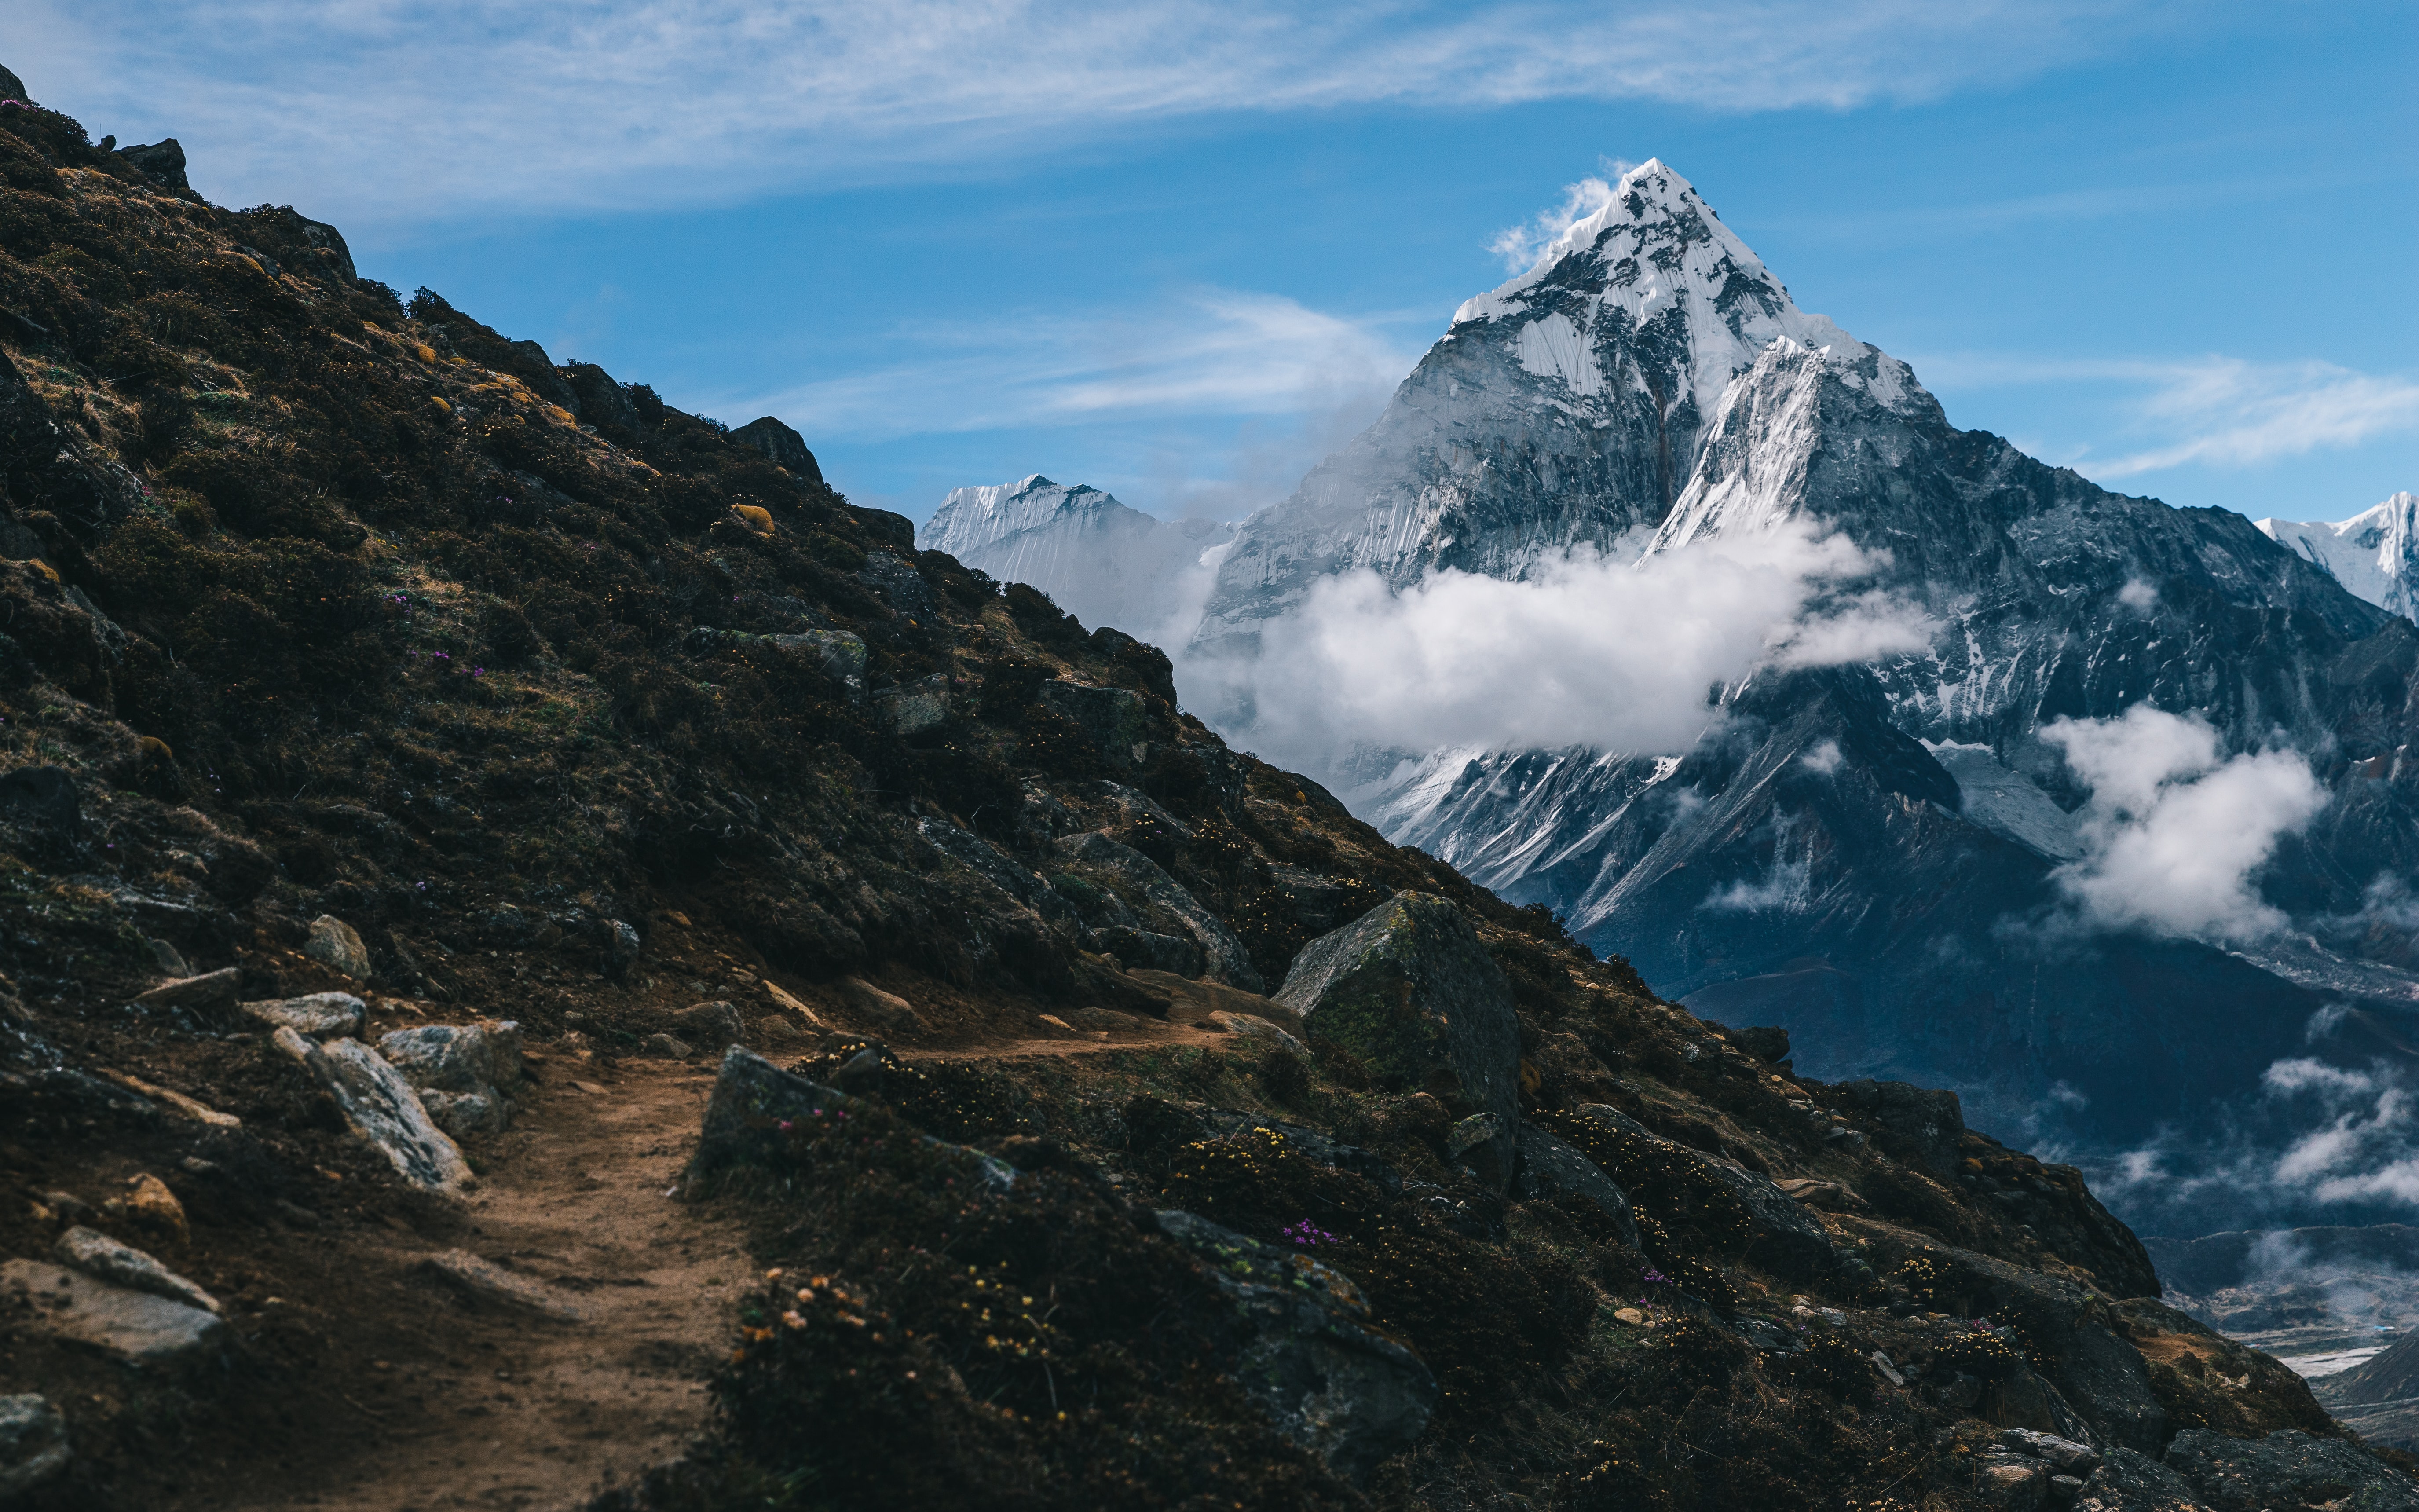 General 5499x3437 landscape nature mountains snow rocks Mount Everest Nepal path